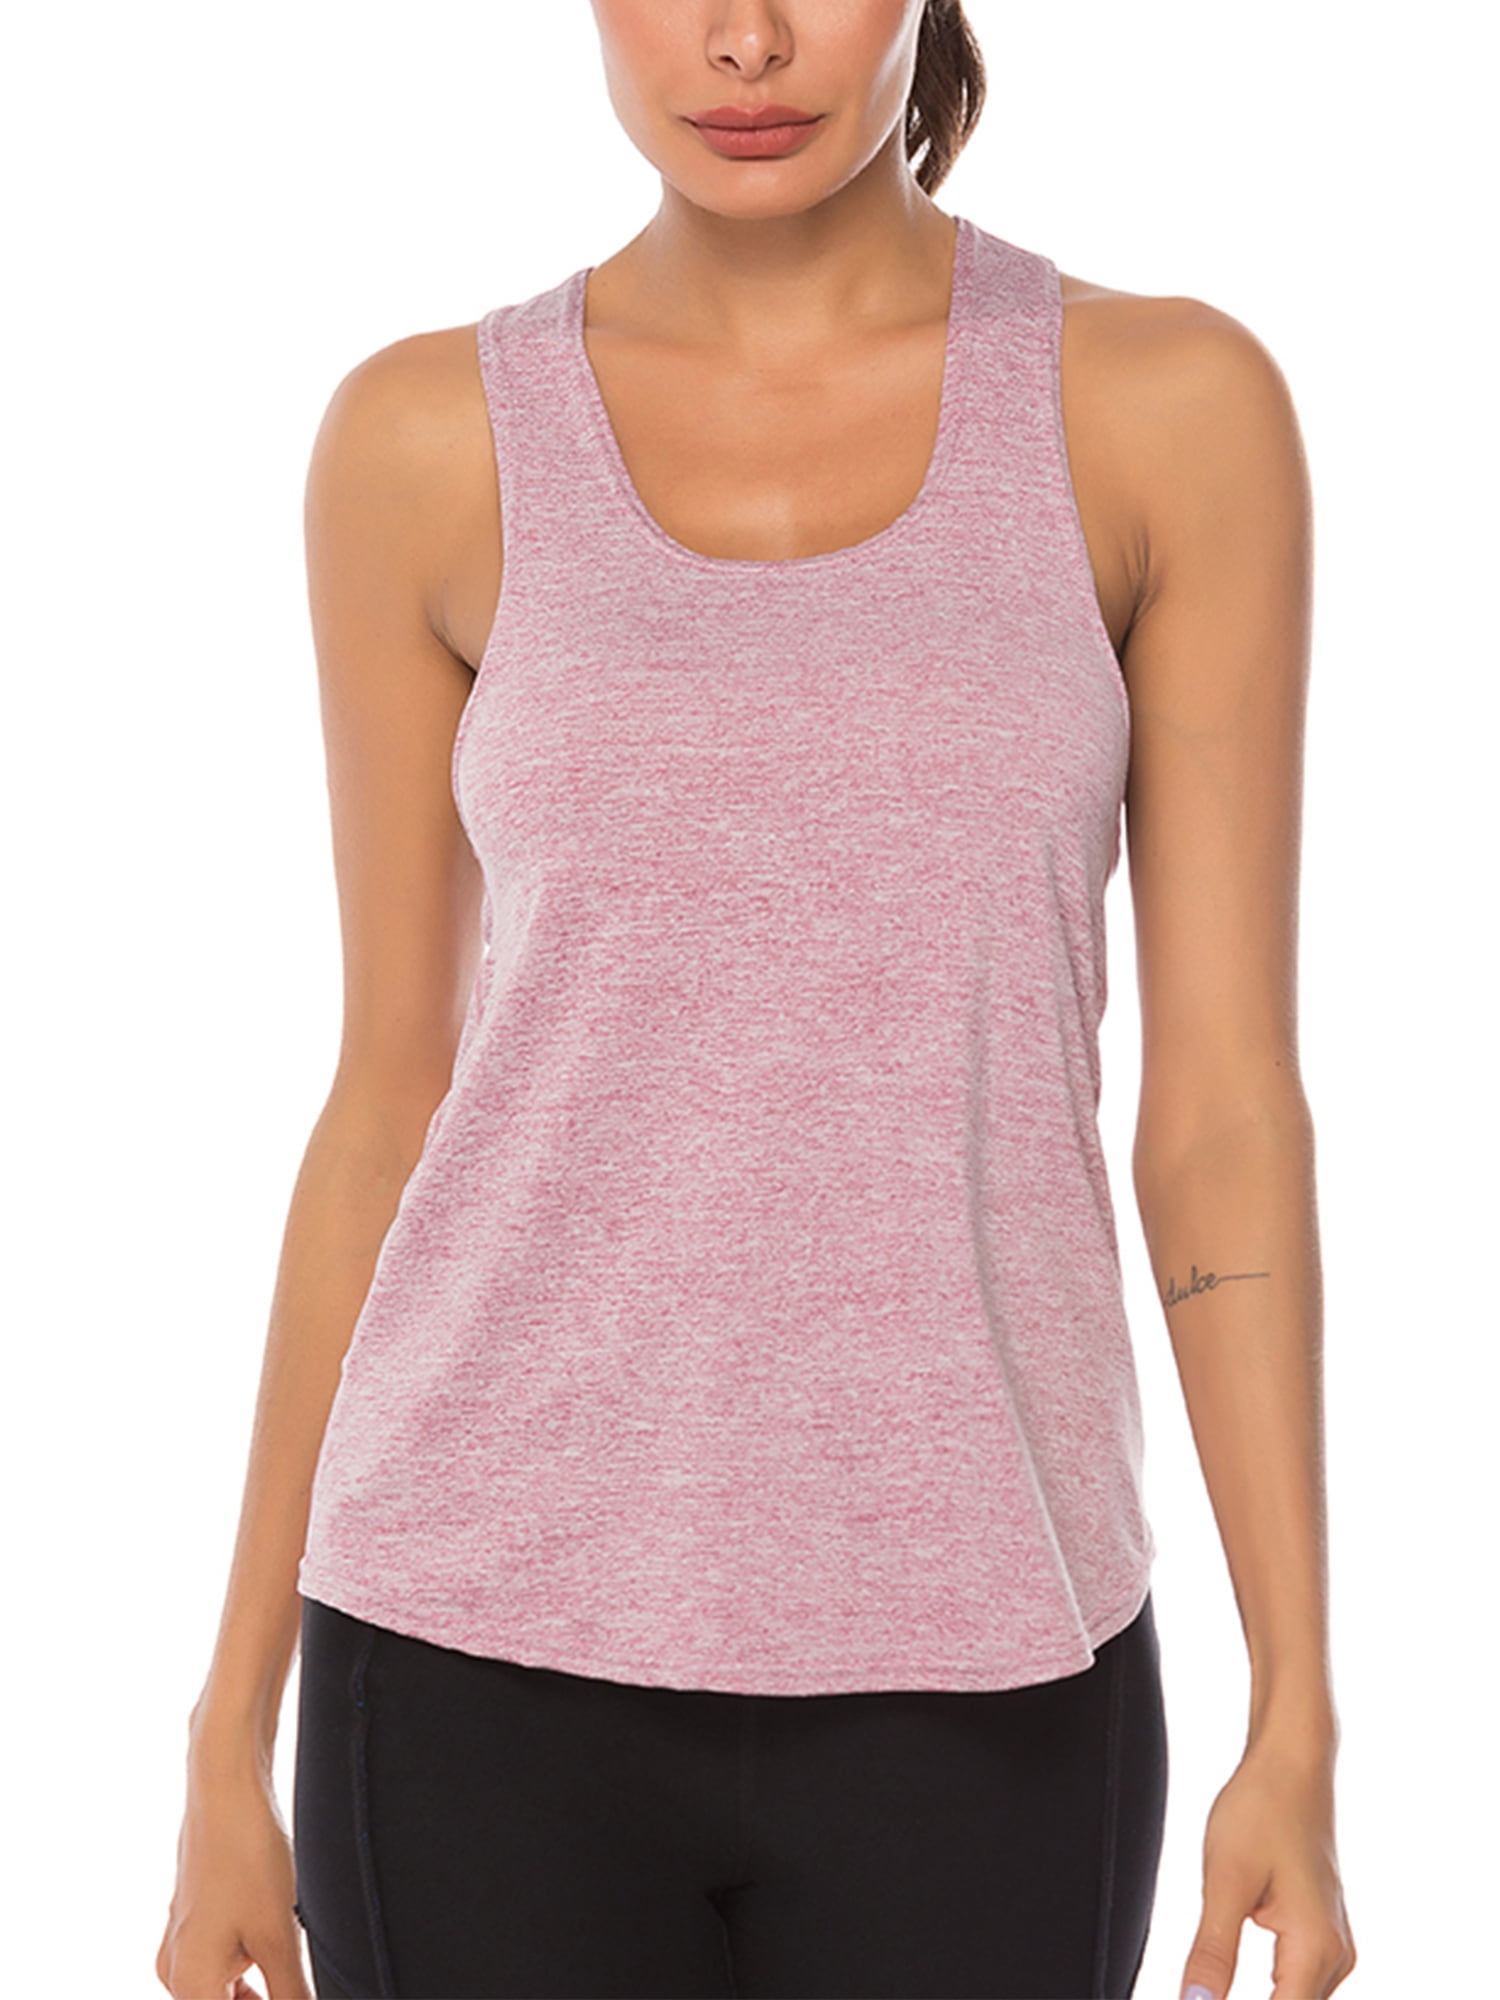 Women Vest Tank Fitness Gym Active Yoga Workout Sleeveless Blouse Top T-Shirt